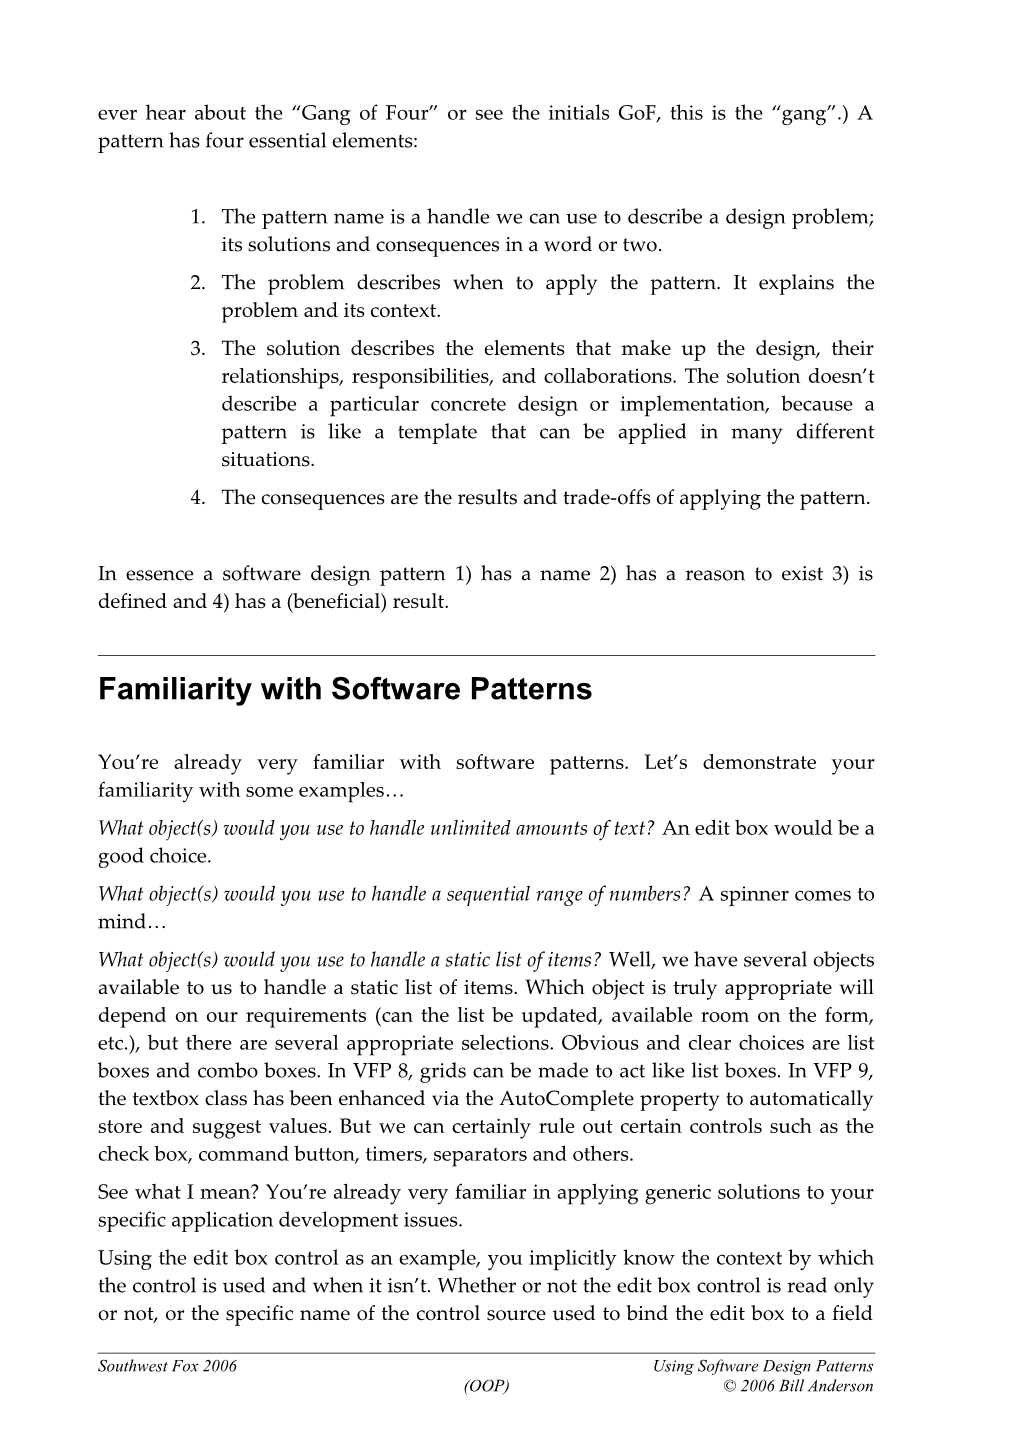 Using Software Design Patterns